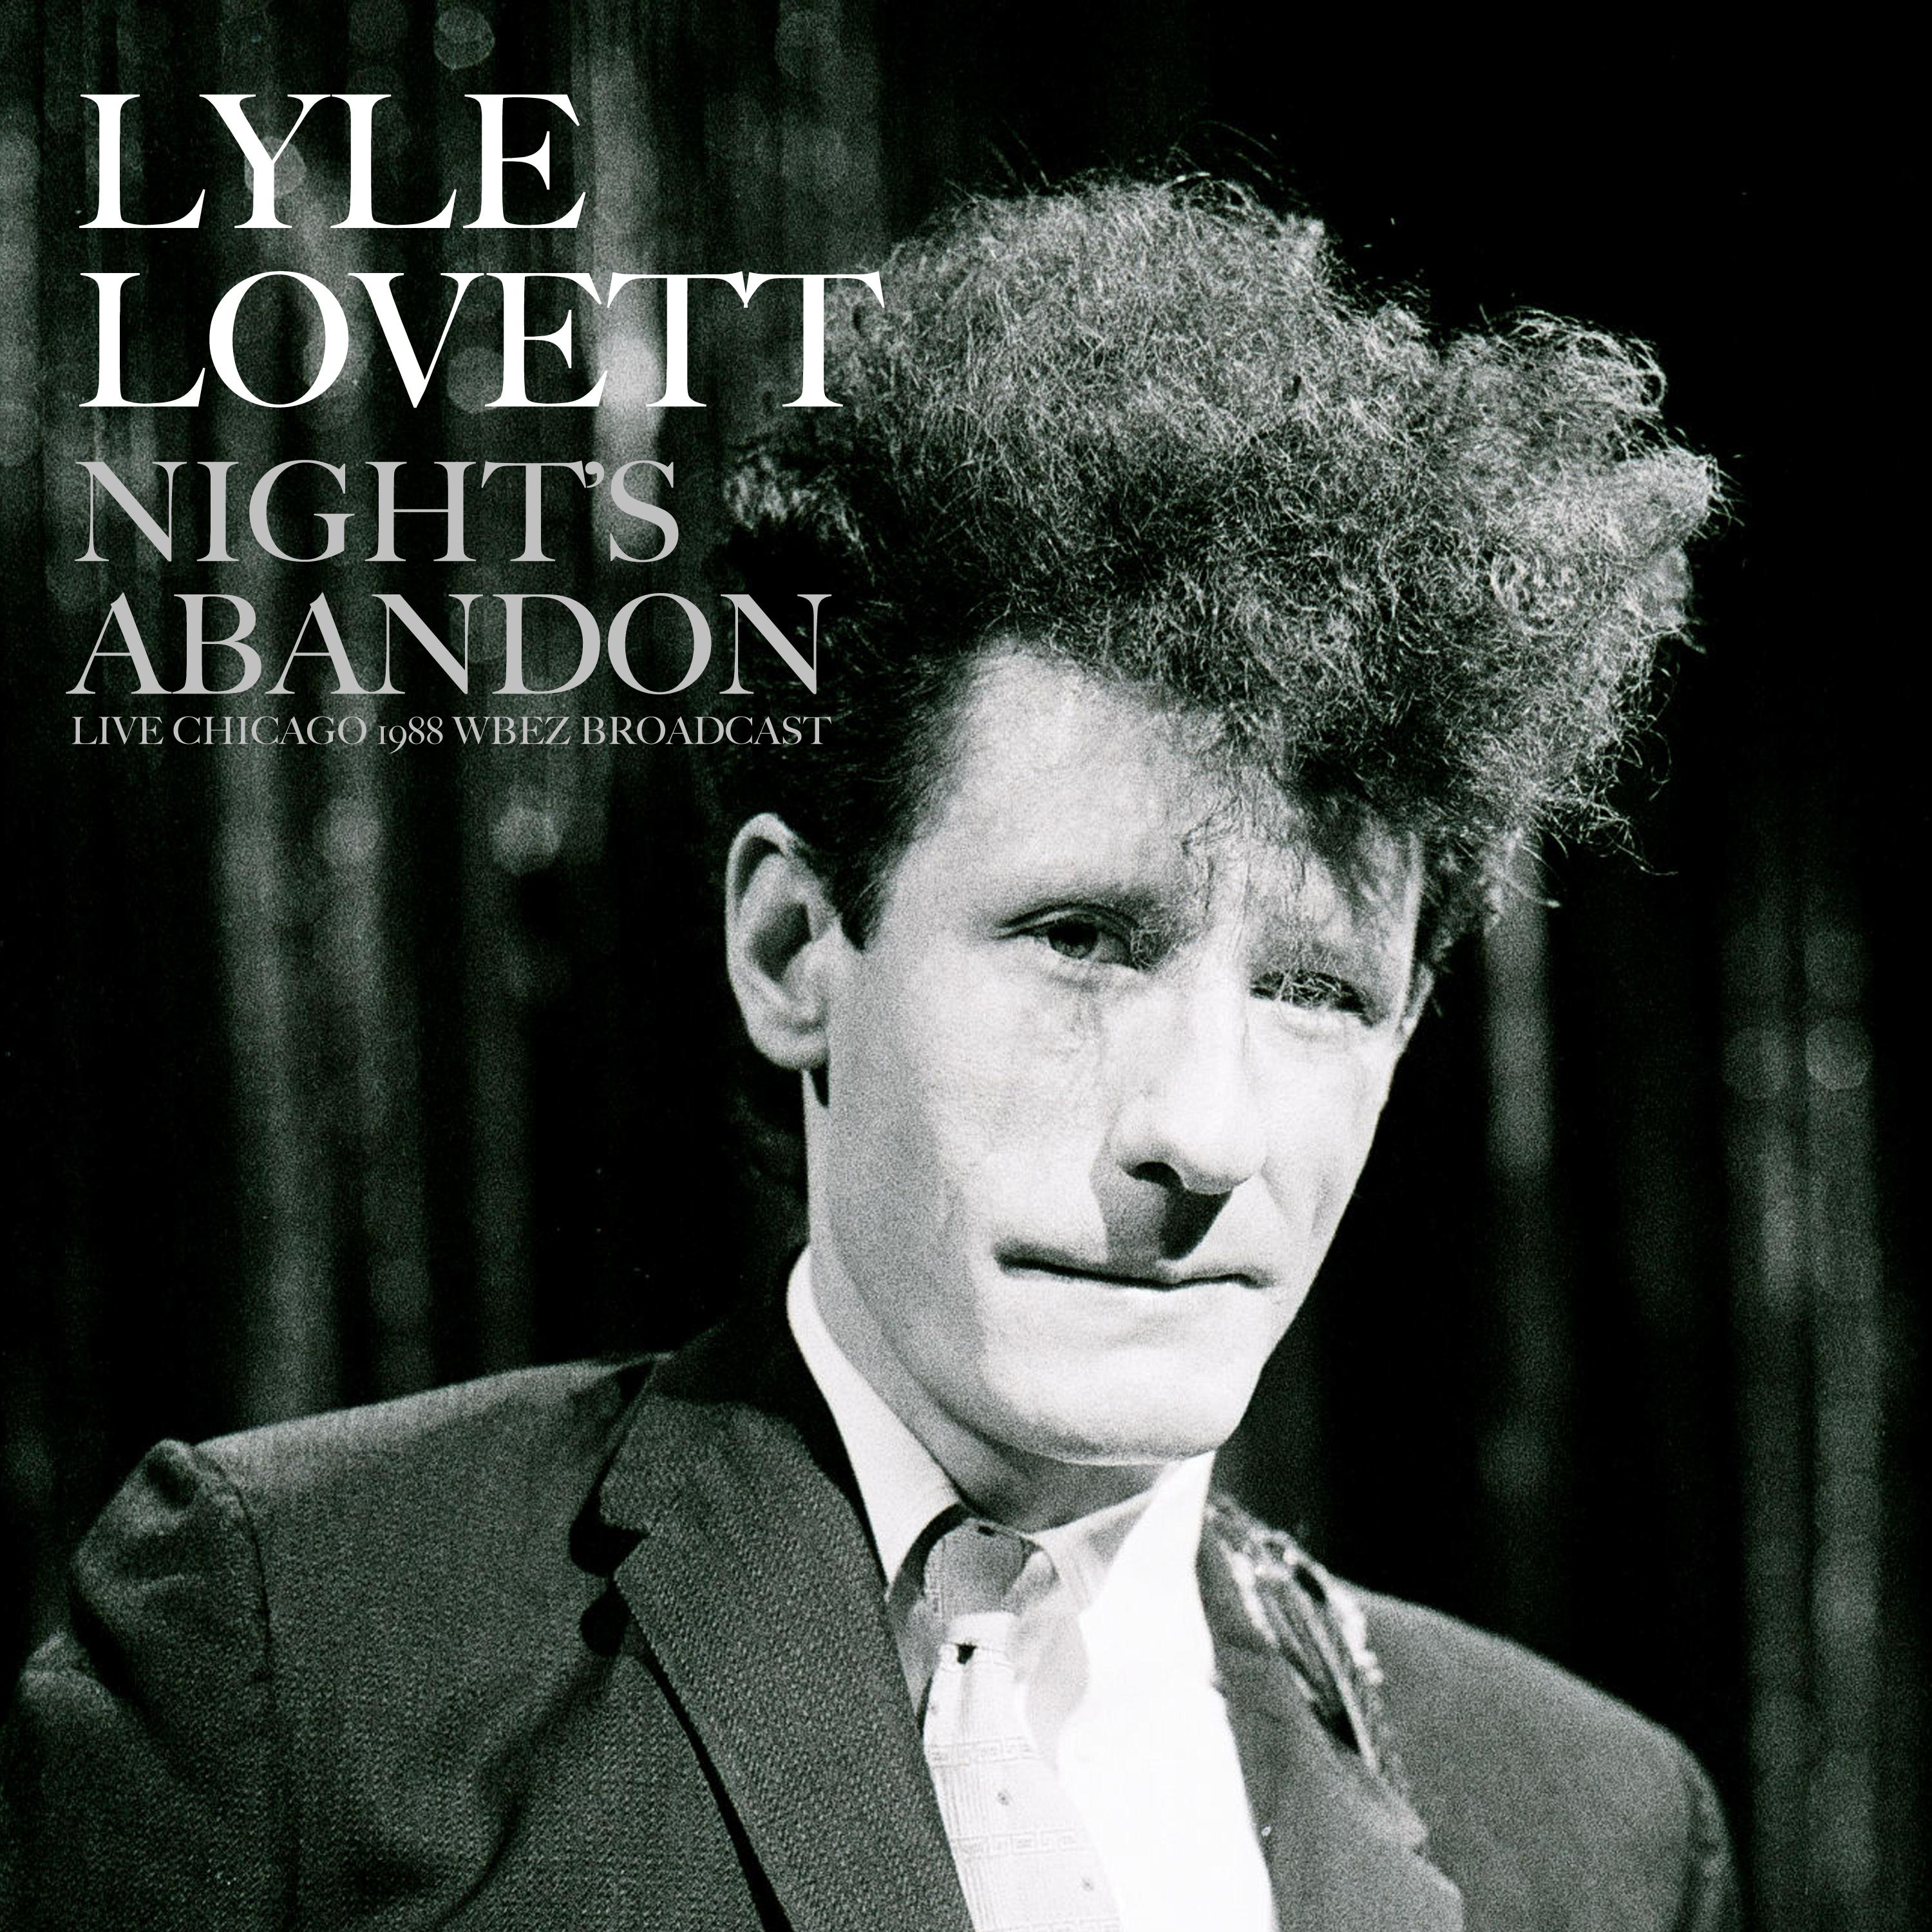 Lyle Lovett - She's Hot To Go (Live)